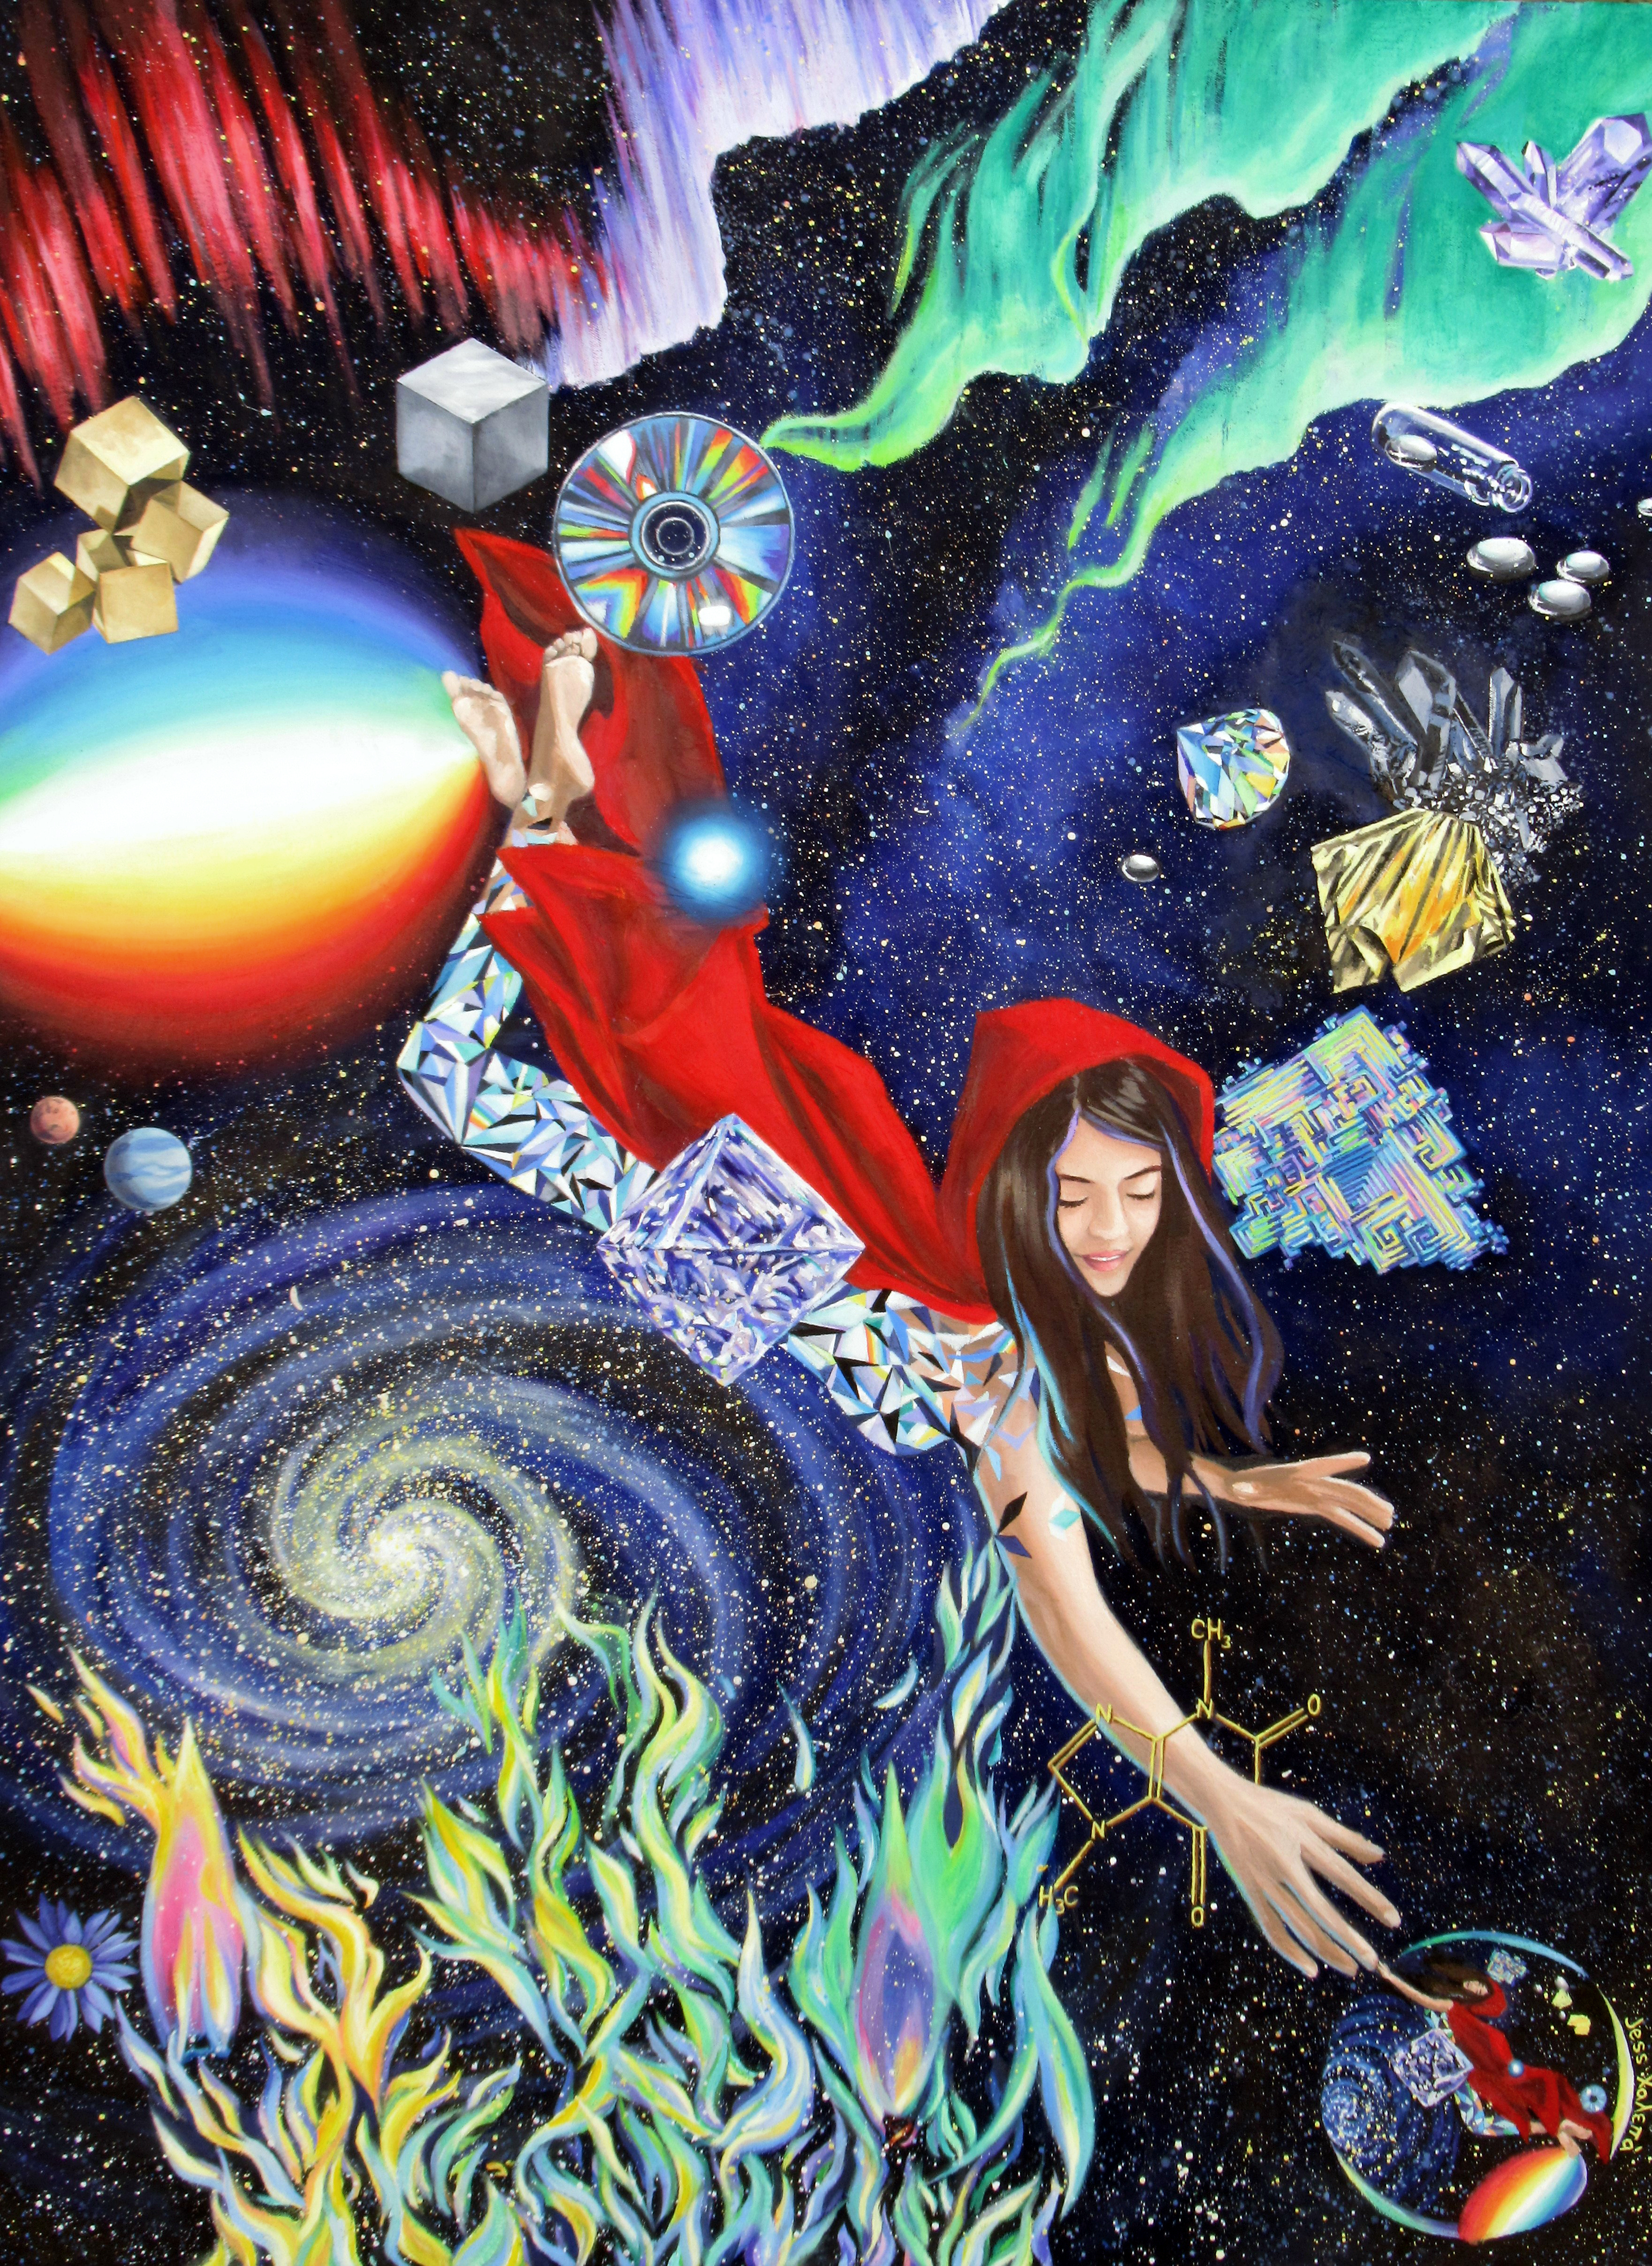 Chemistry Magic, oil on canvas, 36x48 in, Jessica Siemens Xalepa 2021